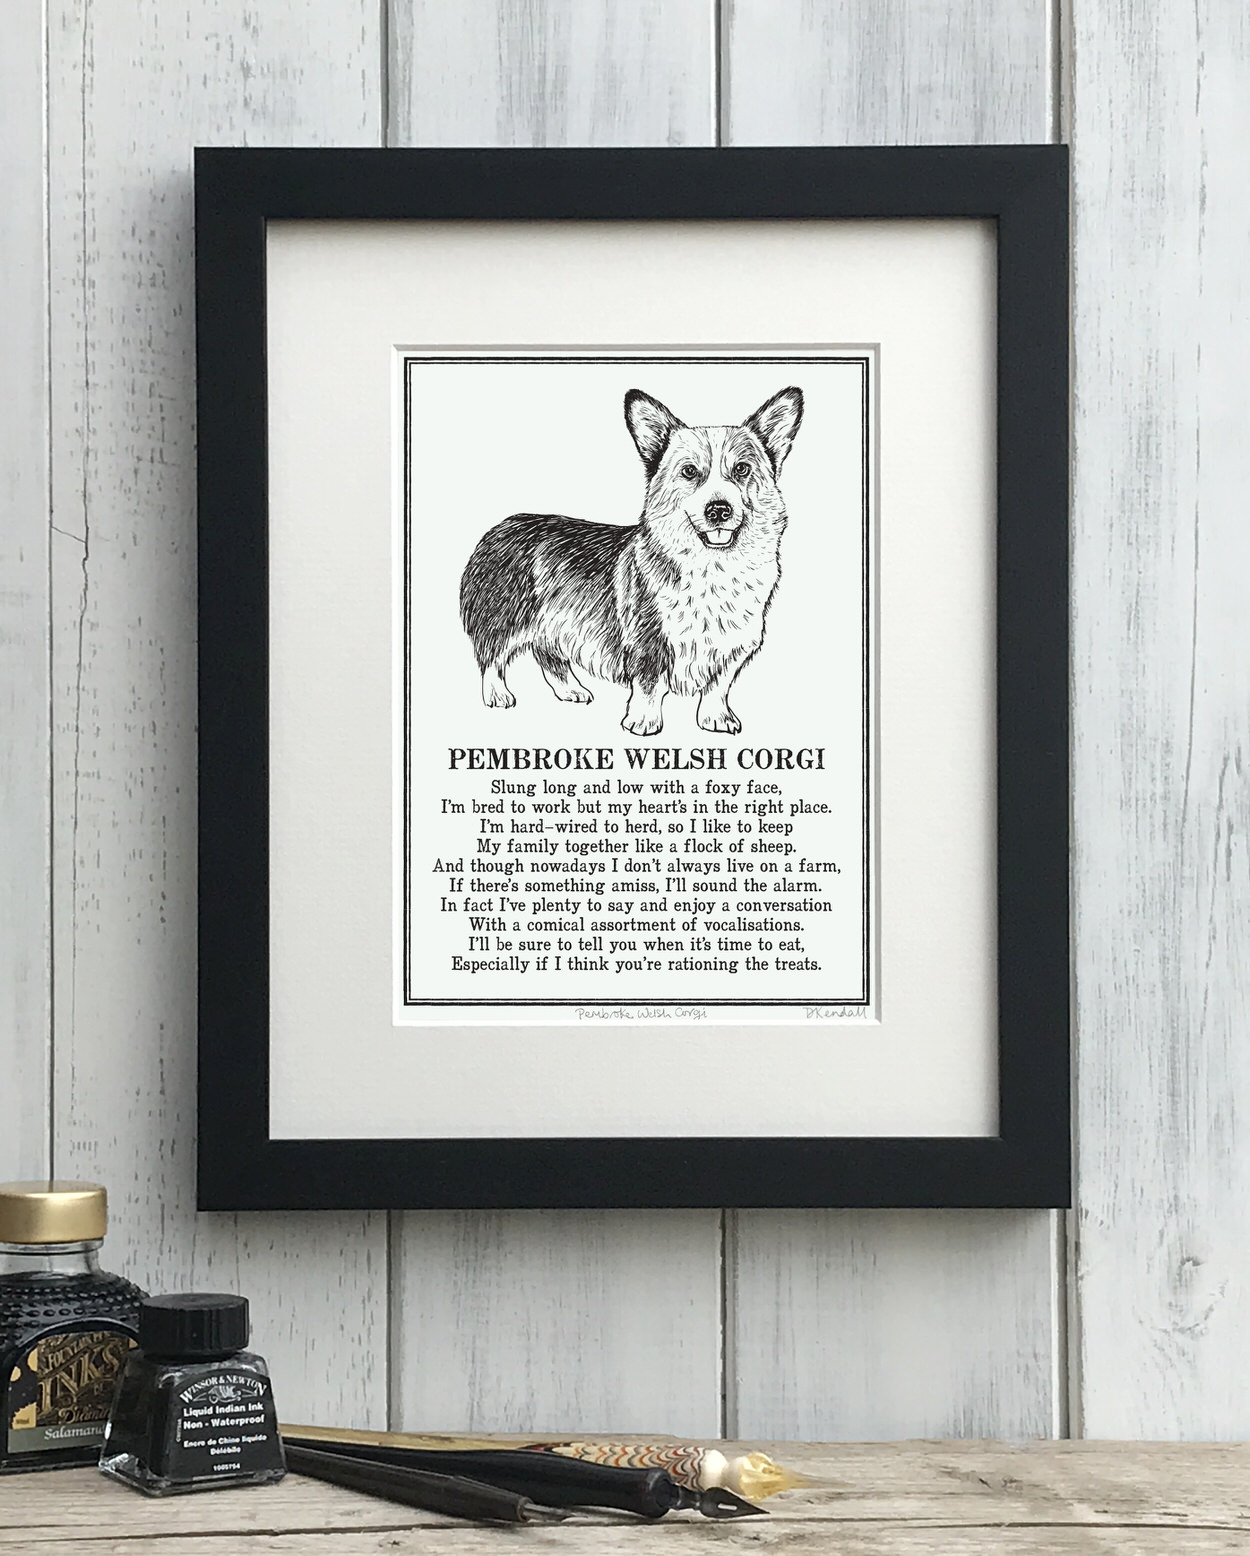 Pembroke Welsh Corgi Doggerel Illustrated Poem Art Print | The Enlightened Hound